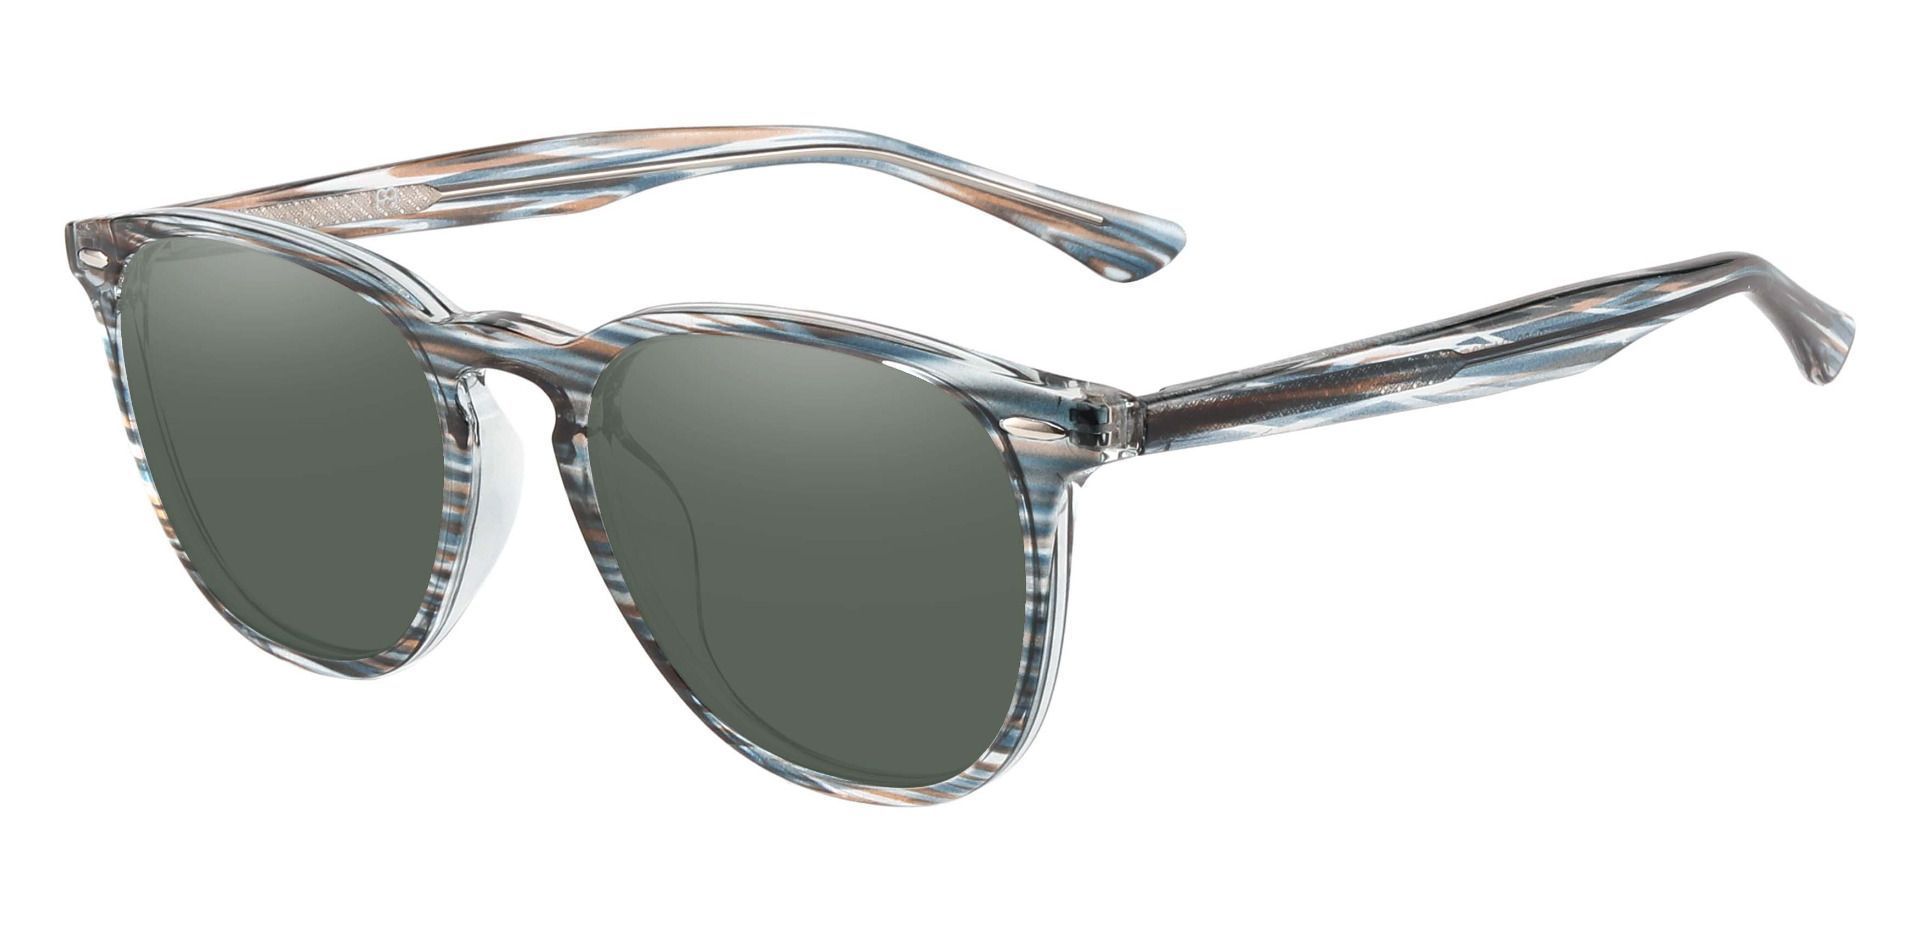 Sycamore Oval Prescription Sunglasses - Blue Frame With Green Lenses